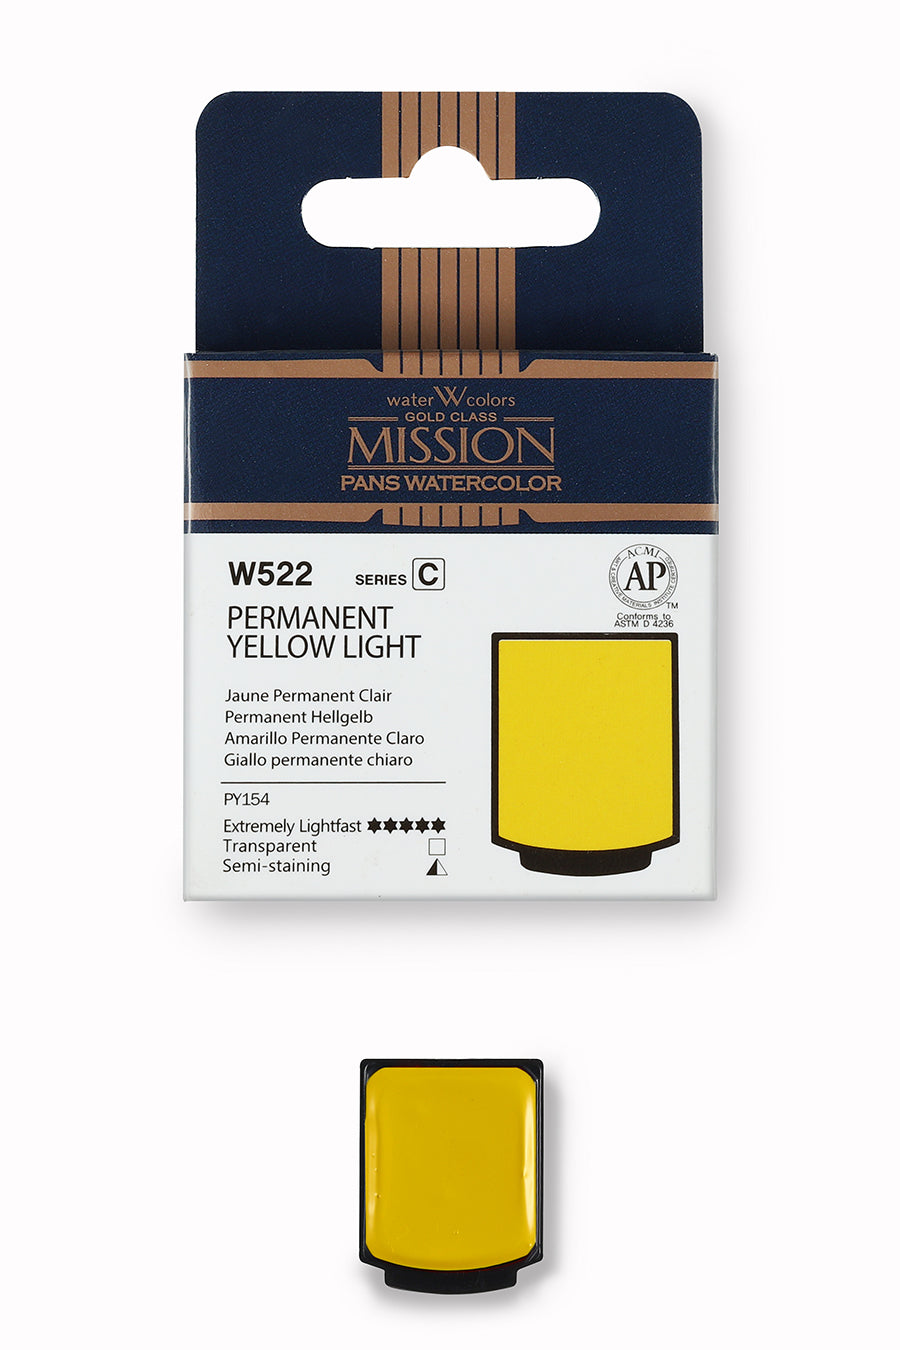 Mijello® Mission #Gold Class #Permanent Yellow Light